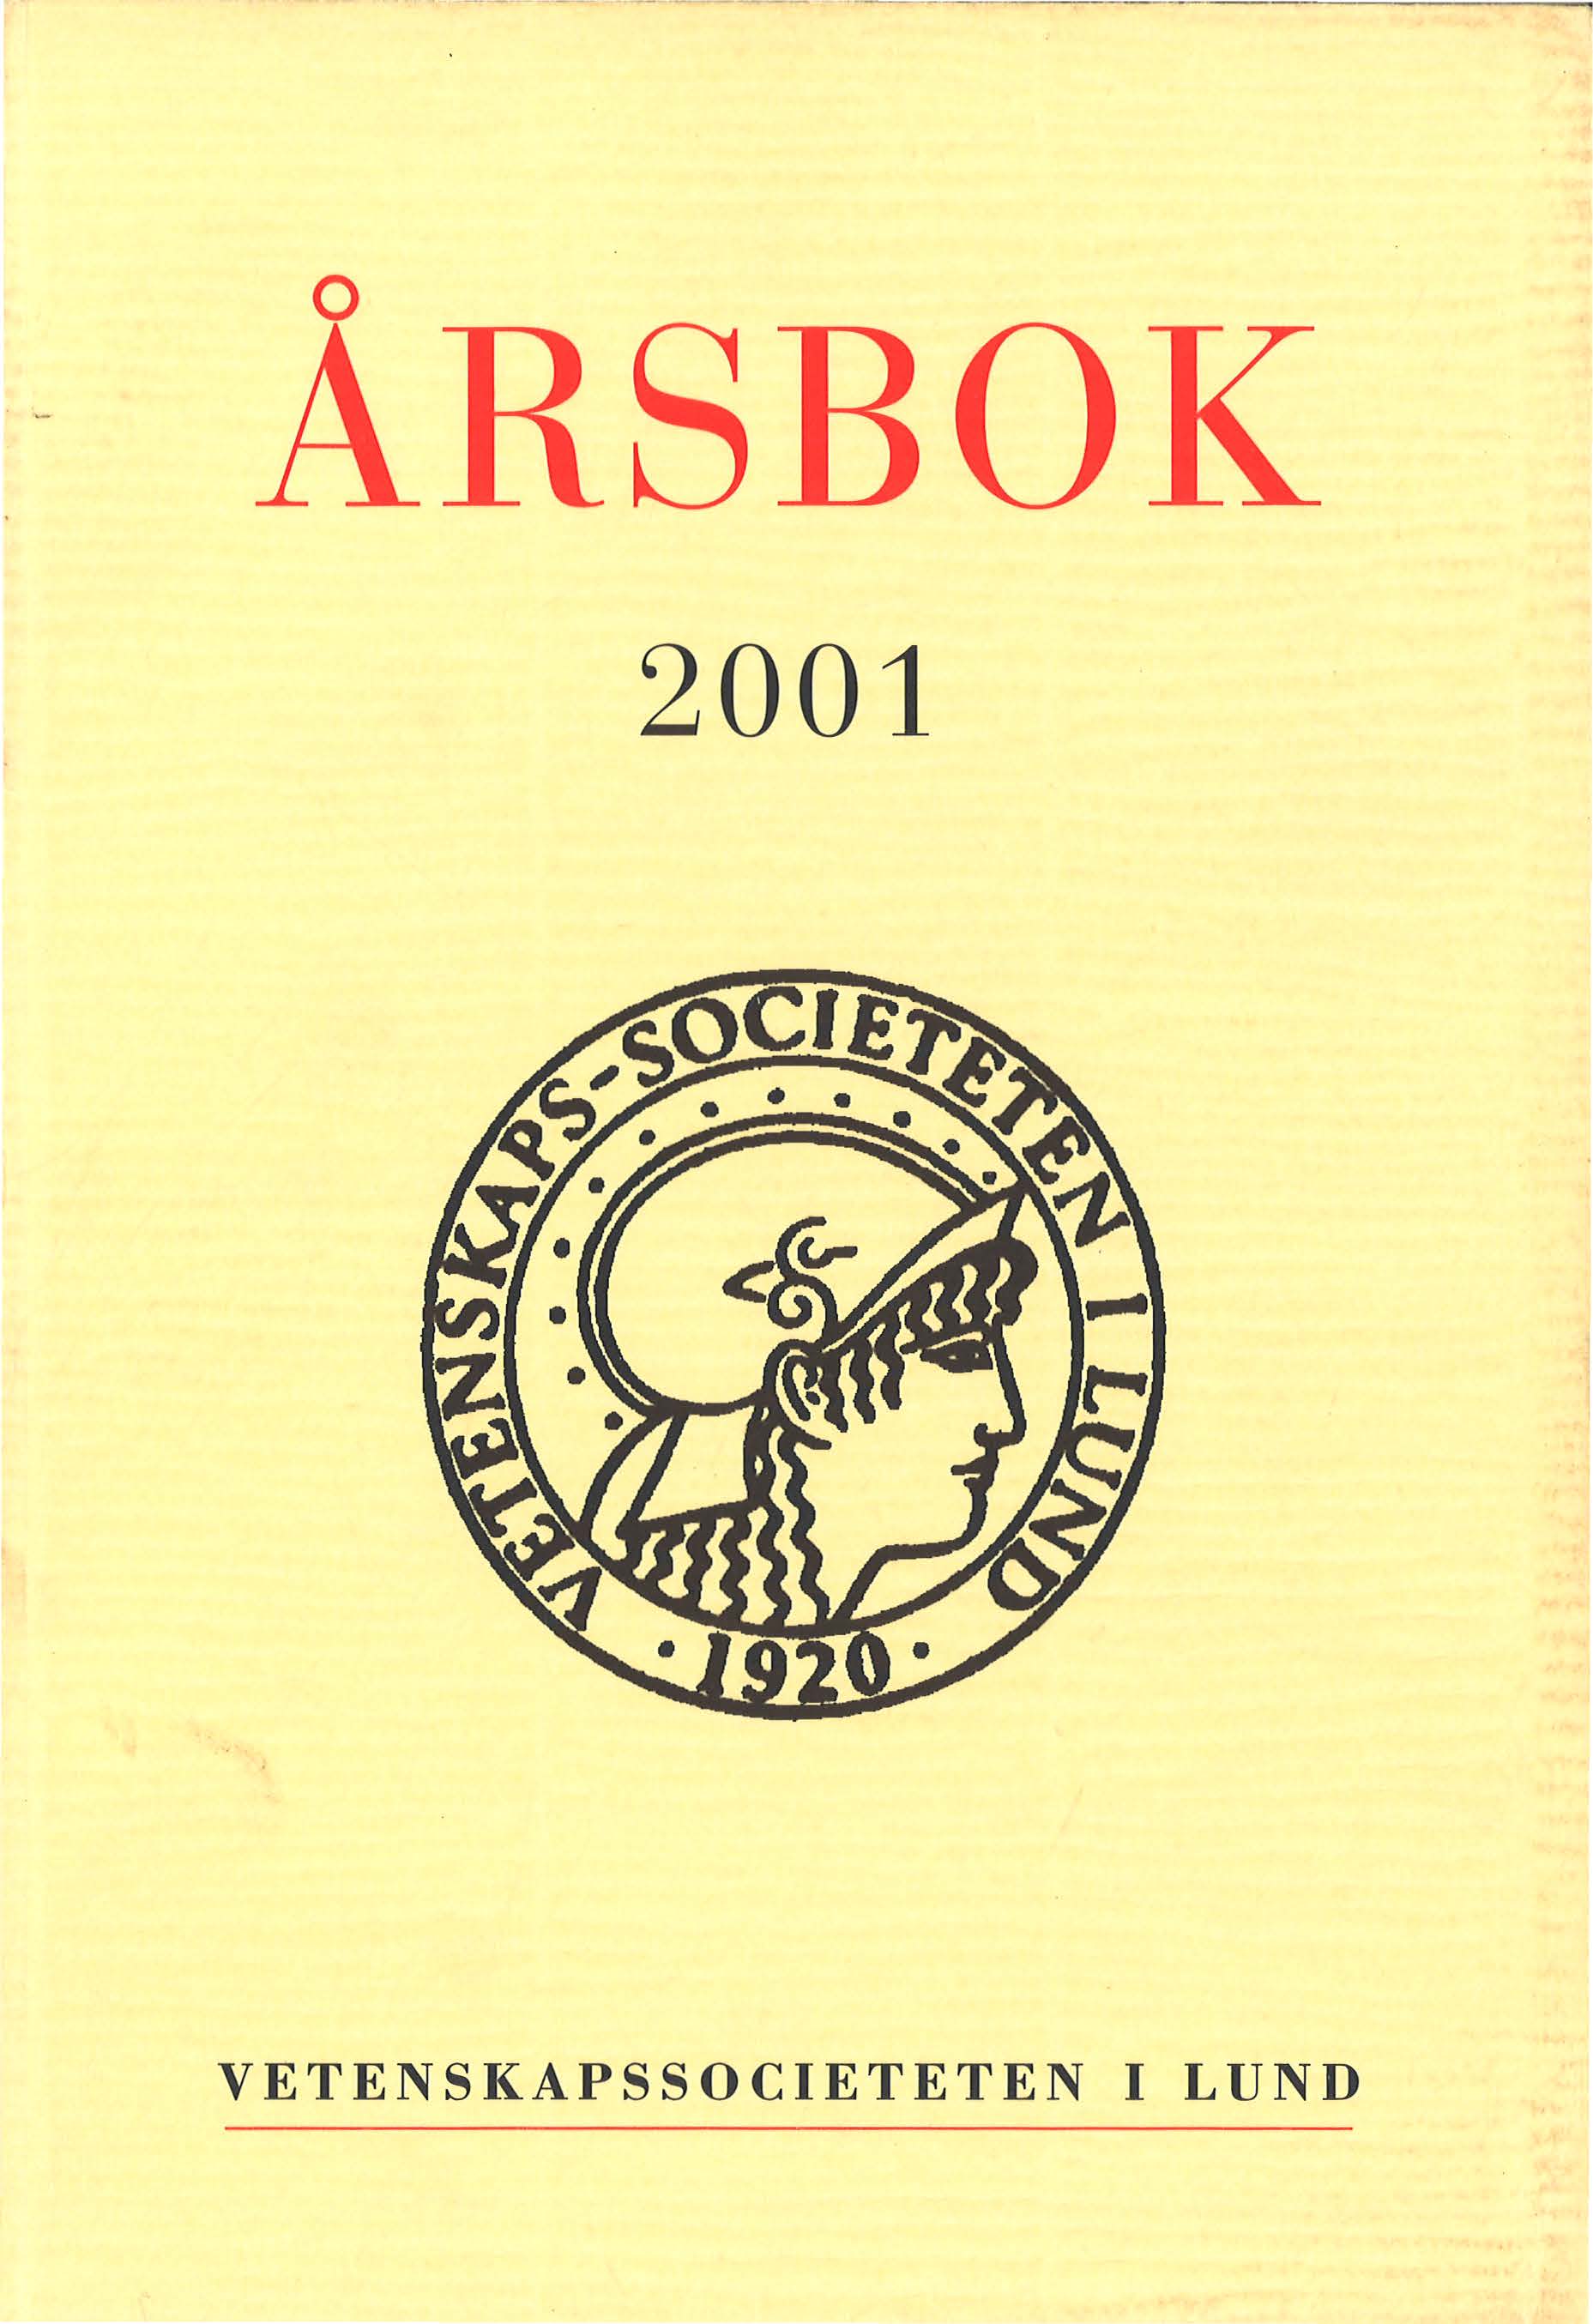 					Visa Årsbok 2001
				